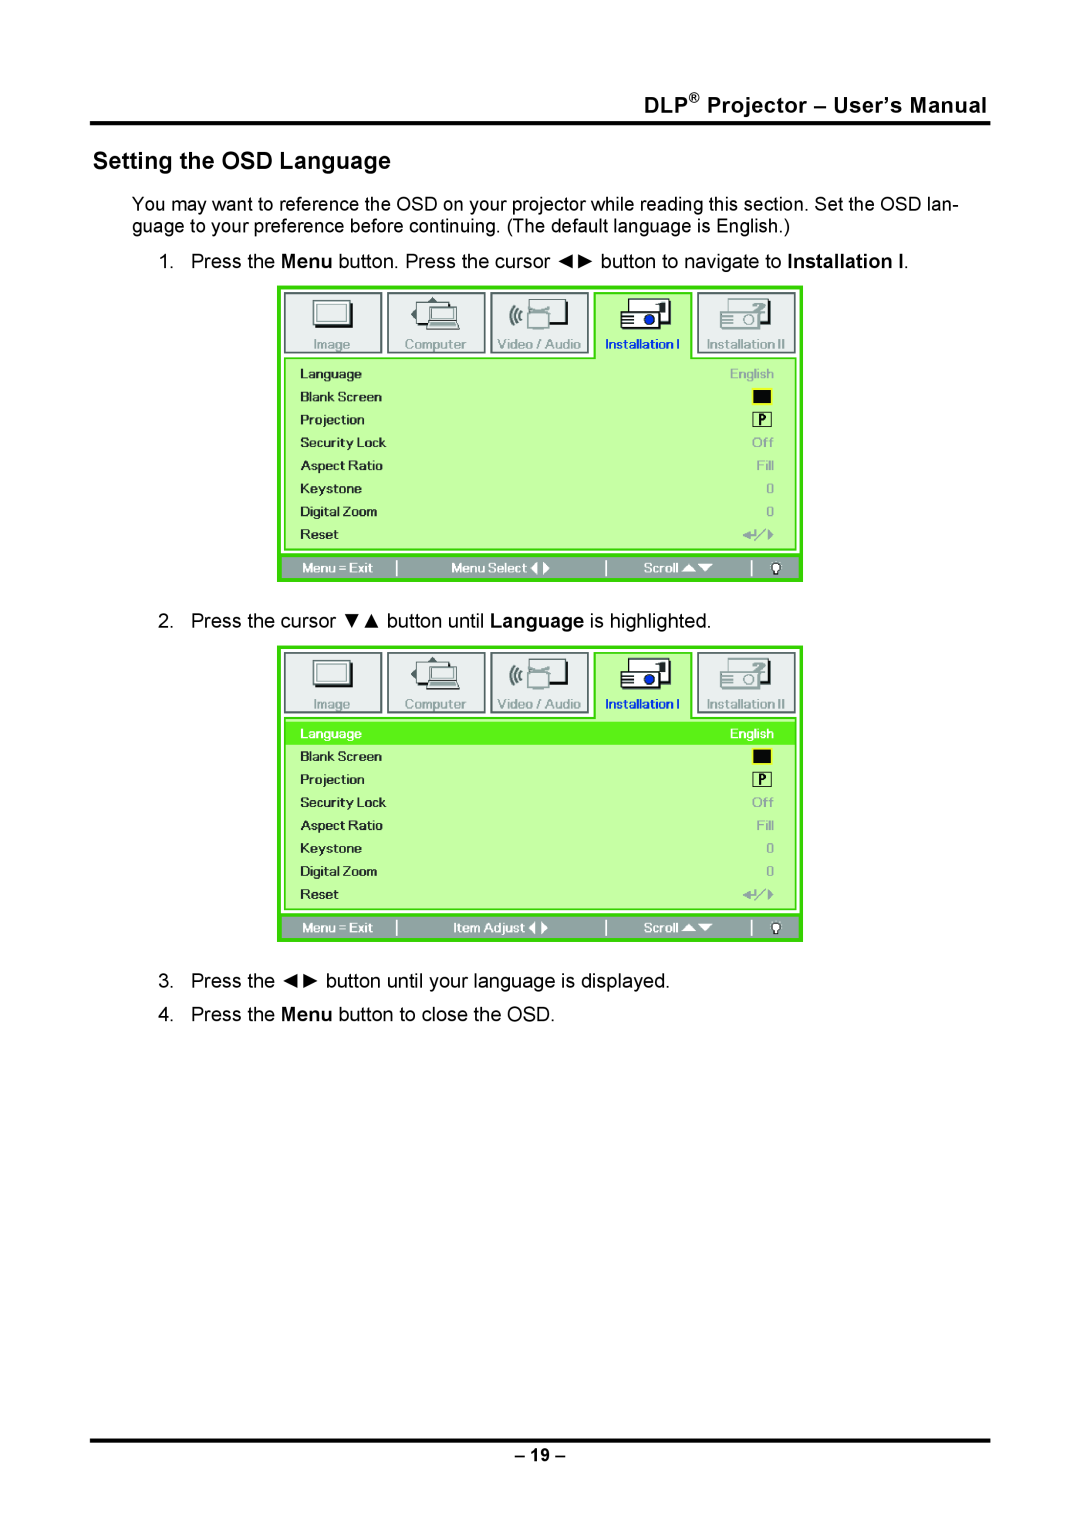 Planar PR5030 manual Setting the OSD Language, DLP Projector - User’s Manual 